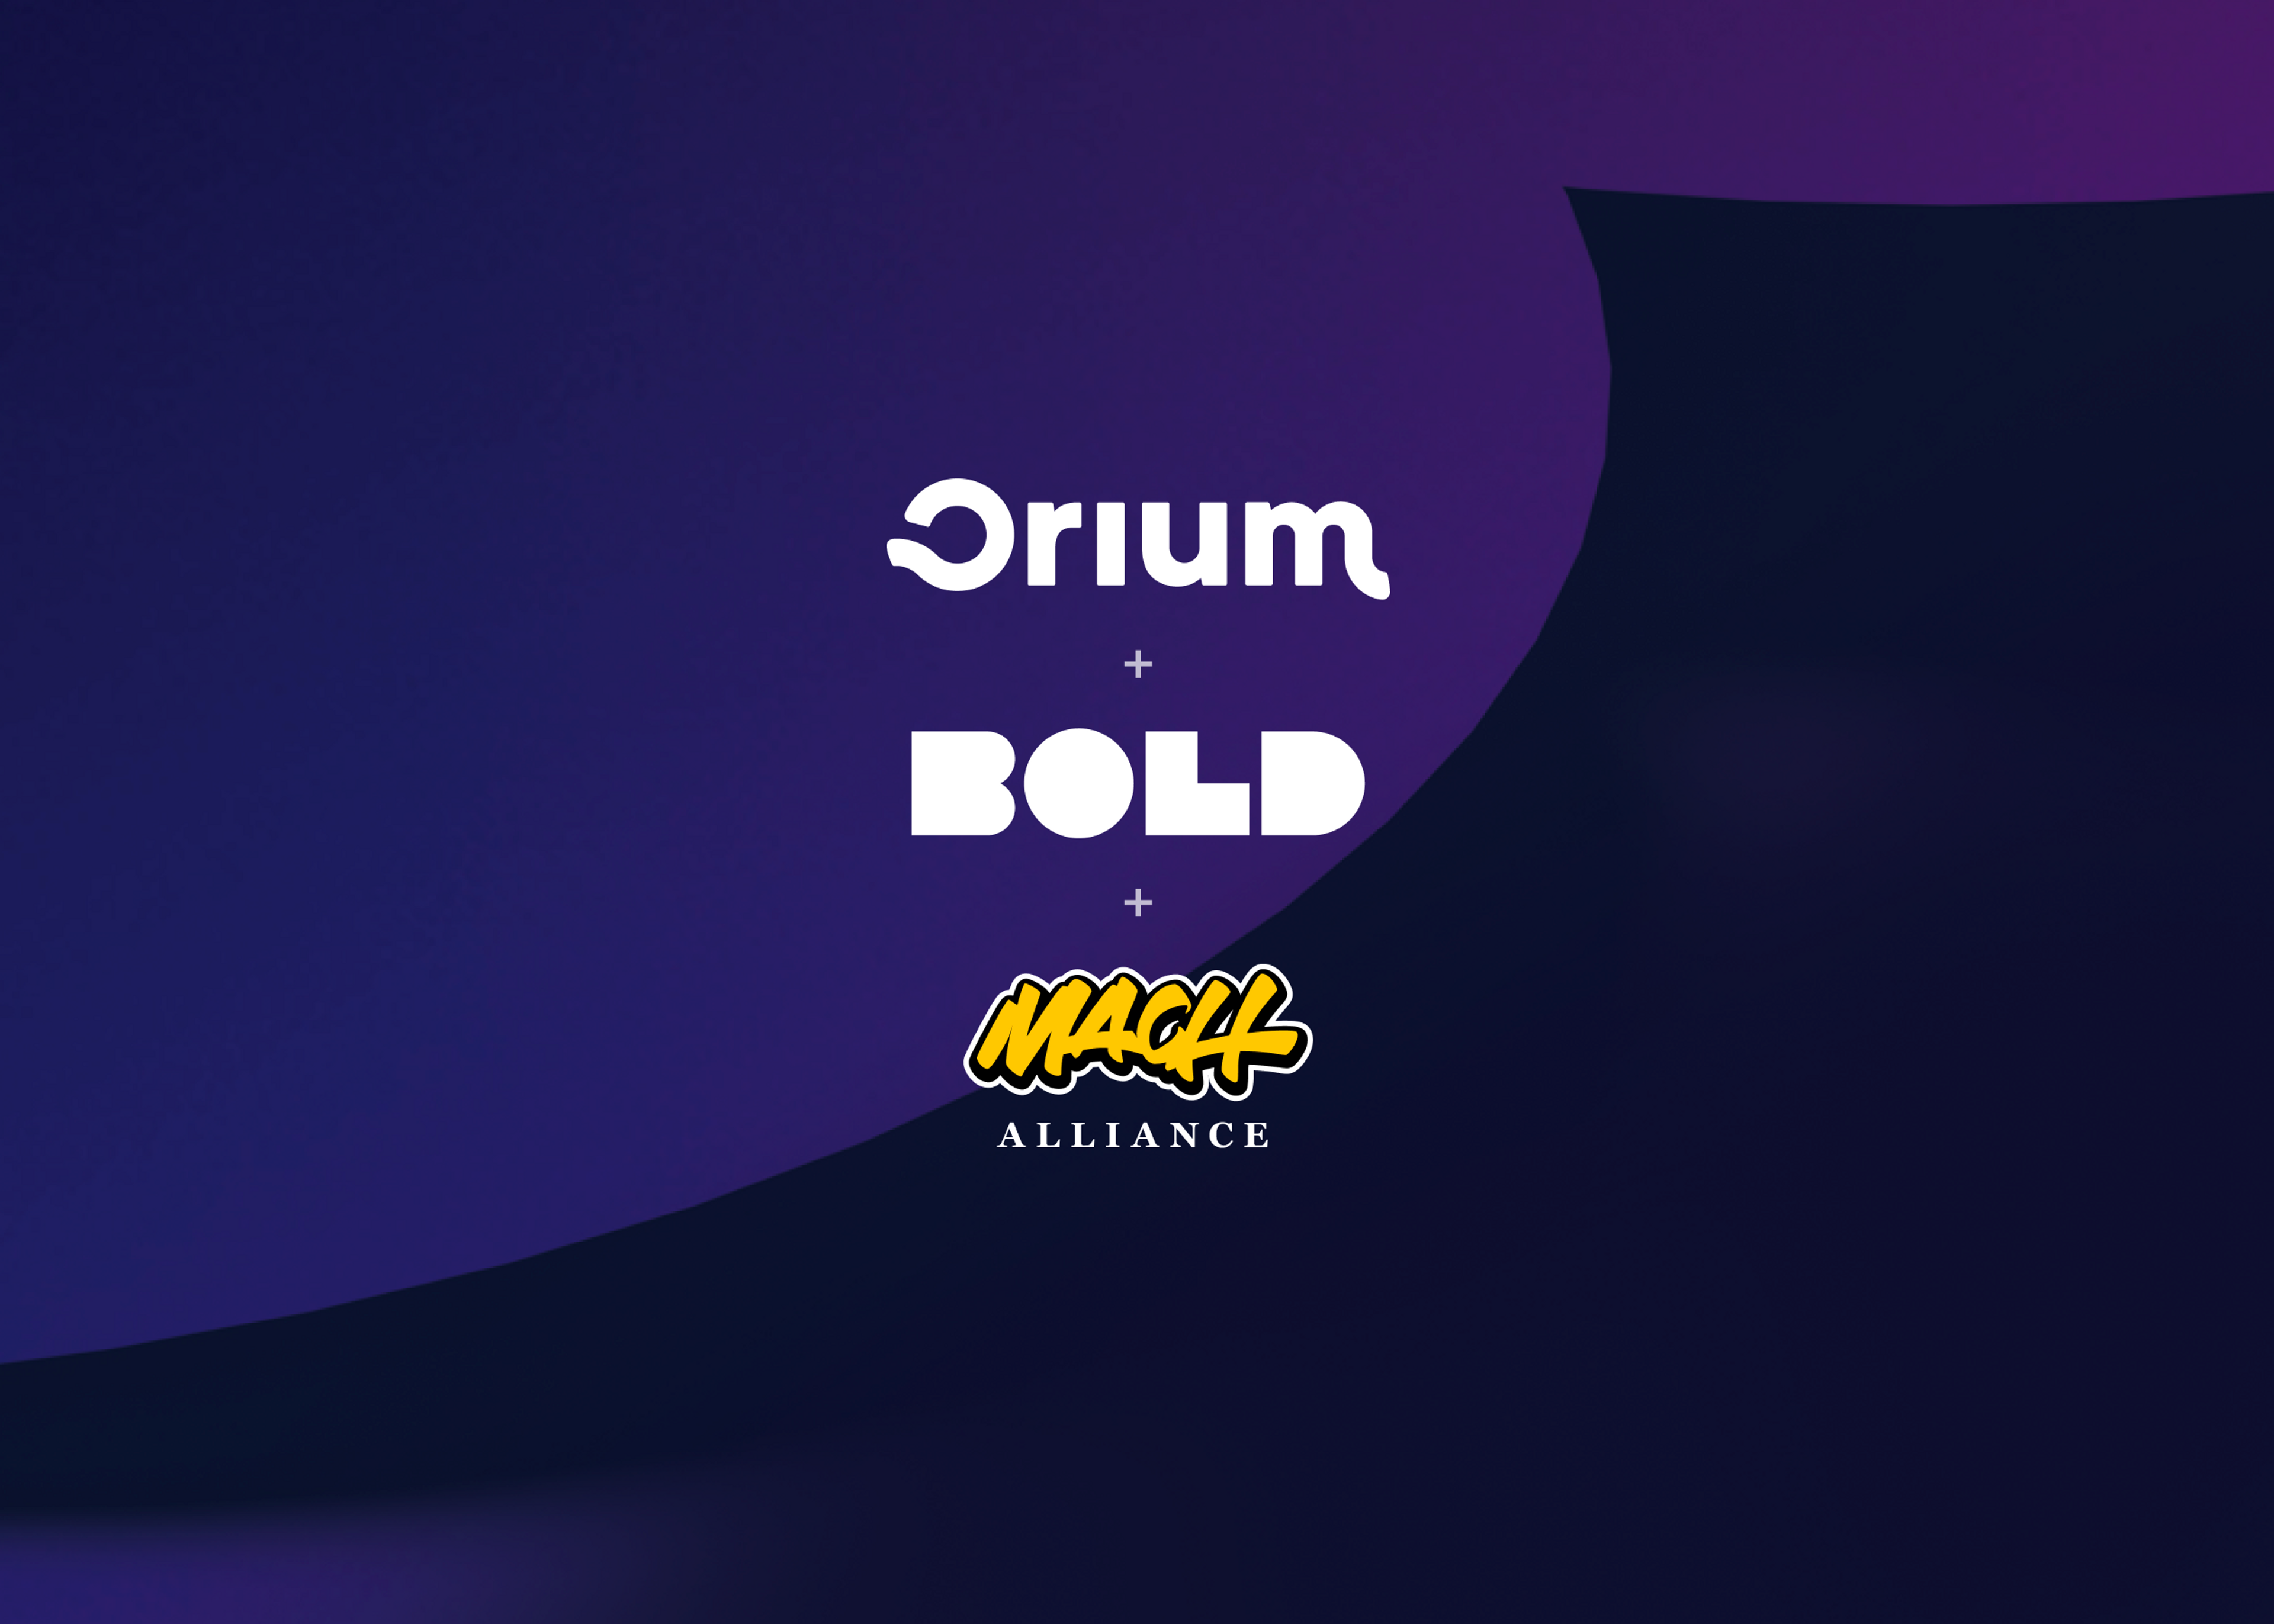 Orium, Bold, and MACH Alliance logos